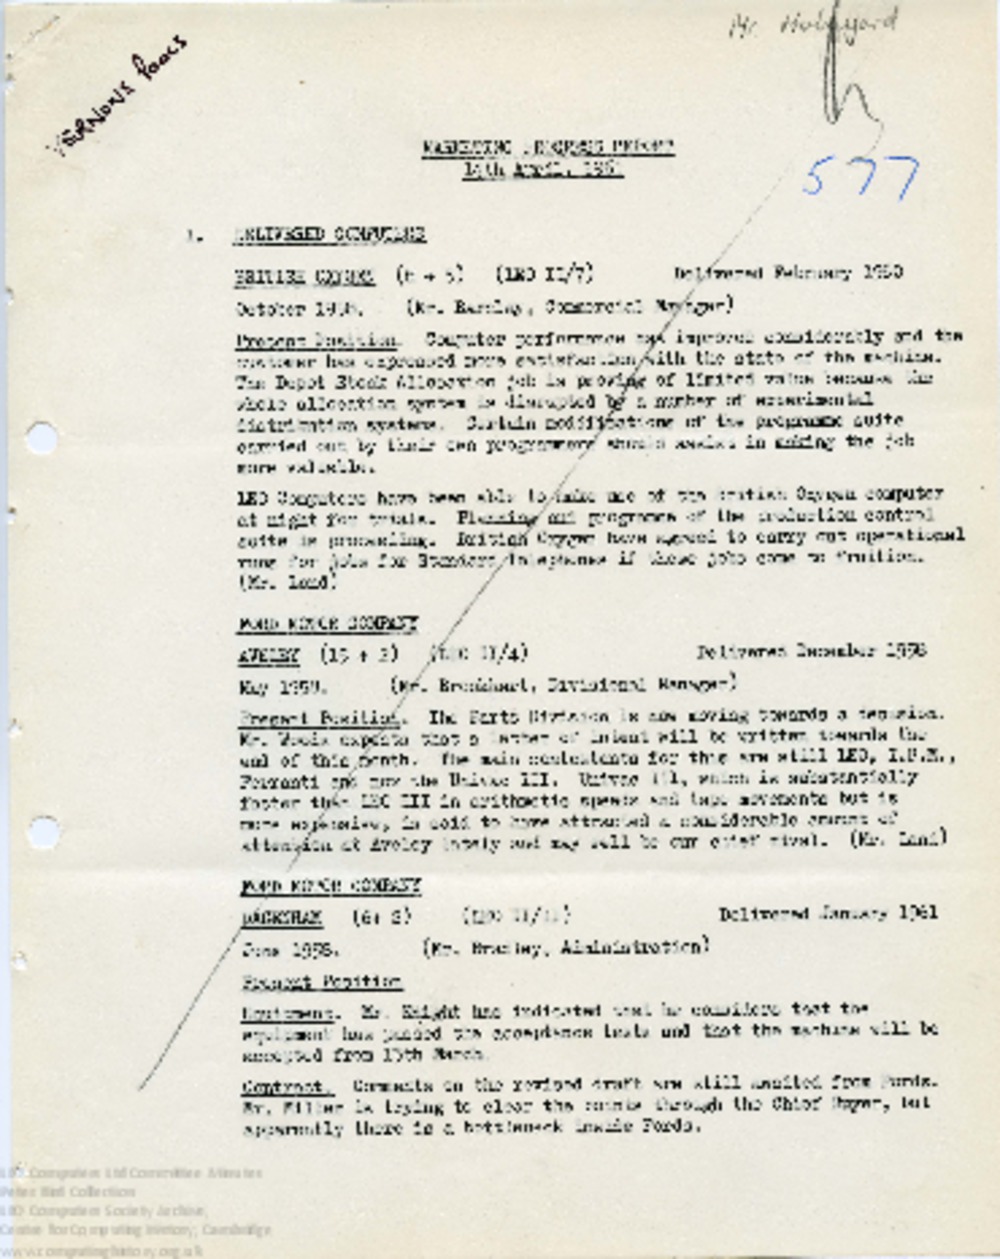 Article: 64498 Marketing Progress Report, 14th Apr 1961